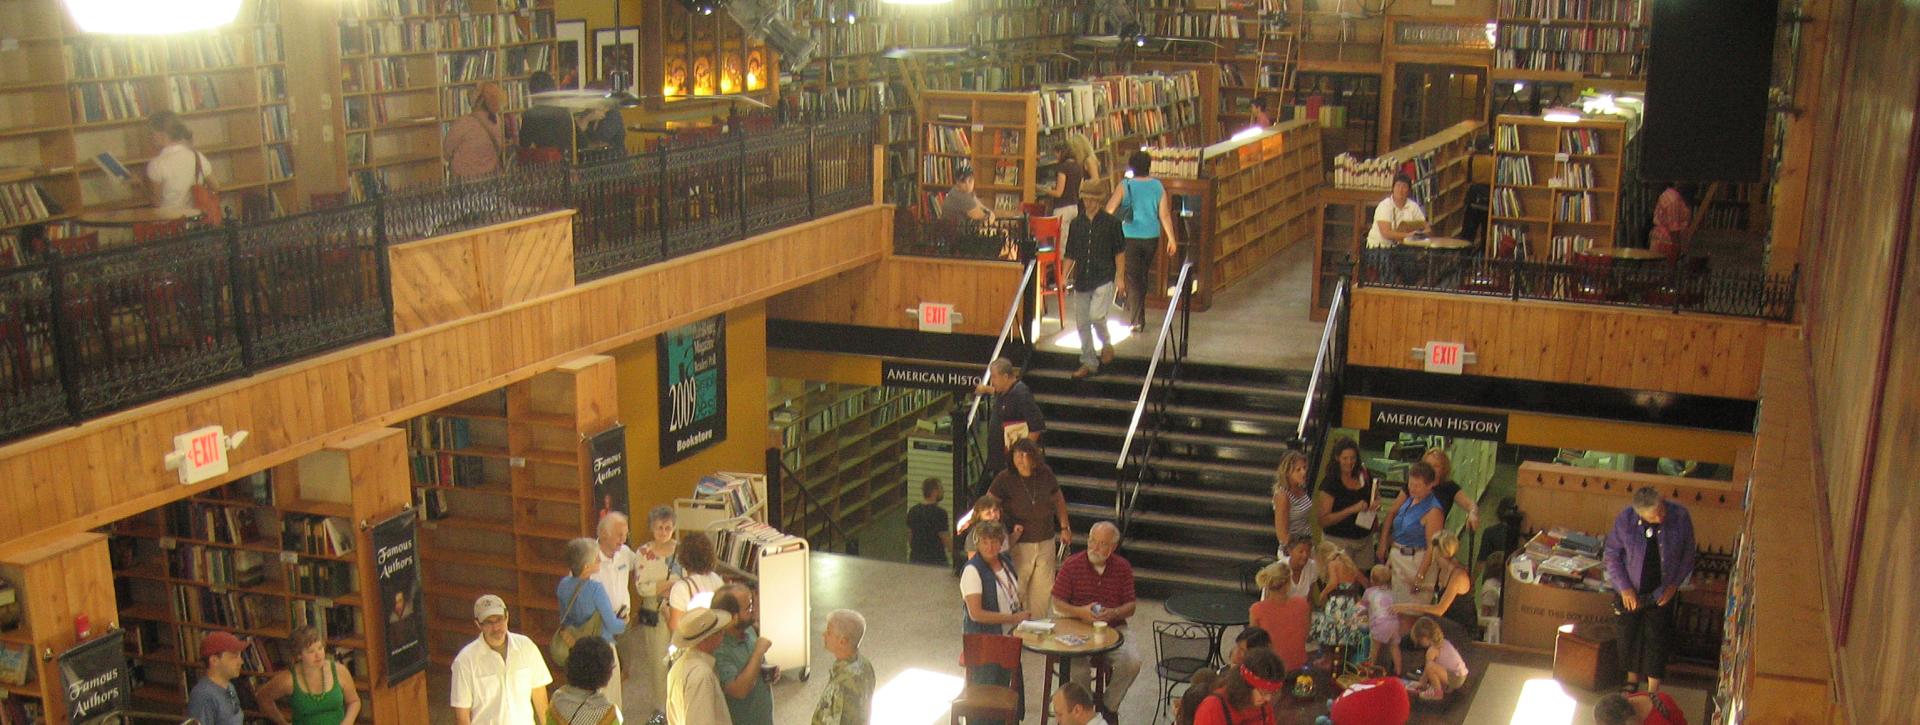 midtown-scholar-bookstore-cafe-midtown-harrisburg-rainy-day